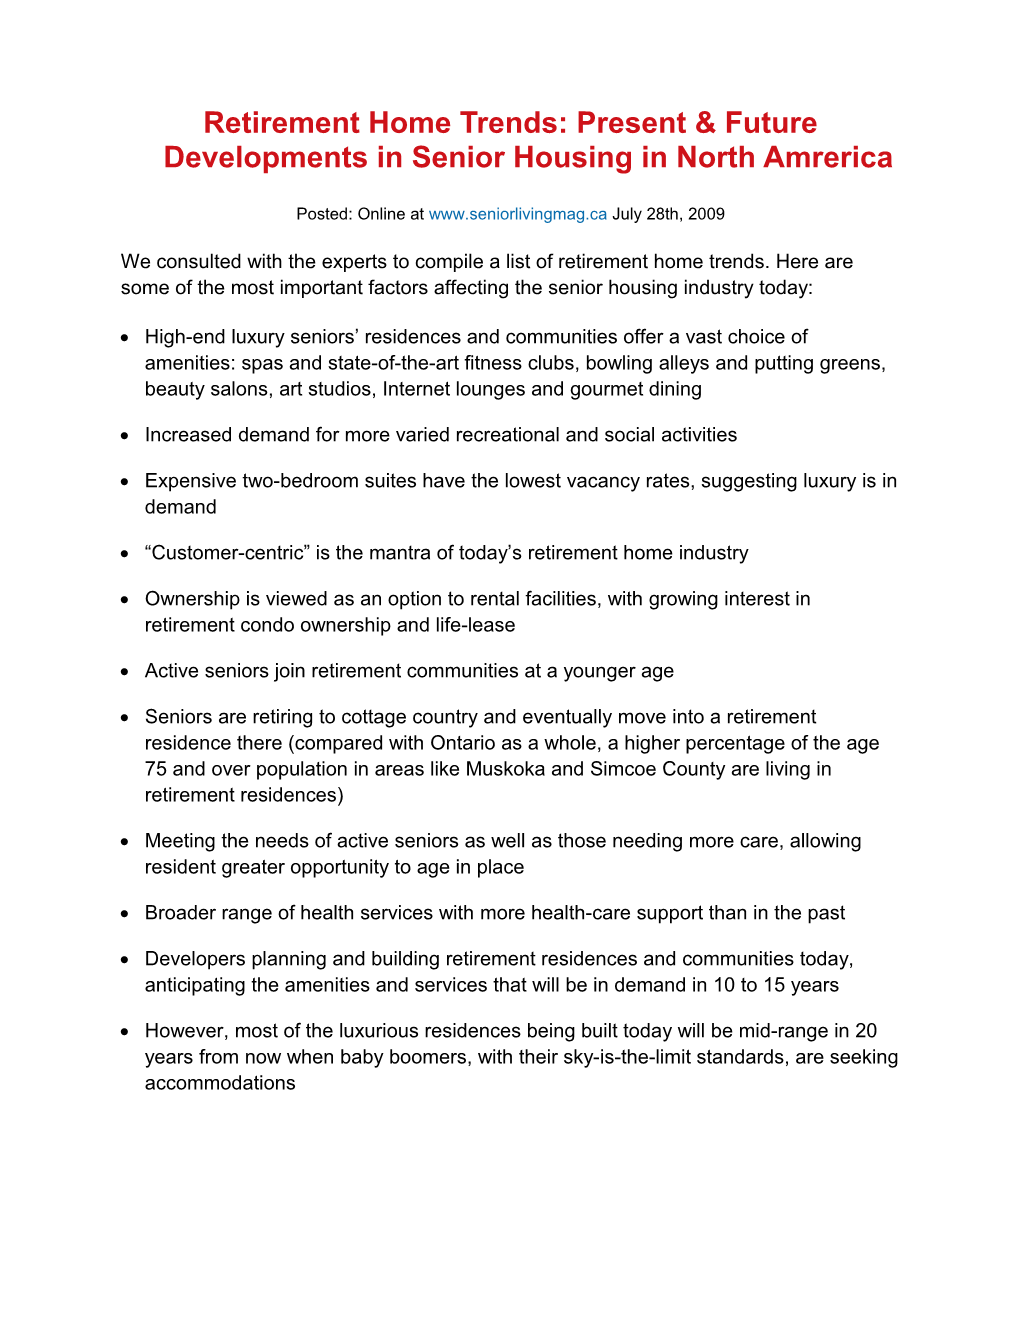 Retirement Home Trends: Present & Future Developments in Senior Housing in North Amrerica